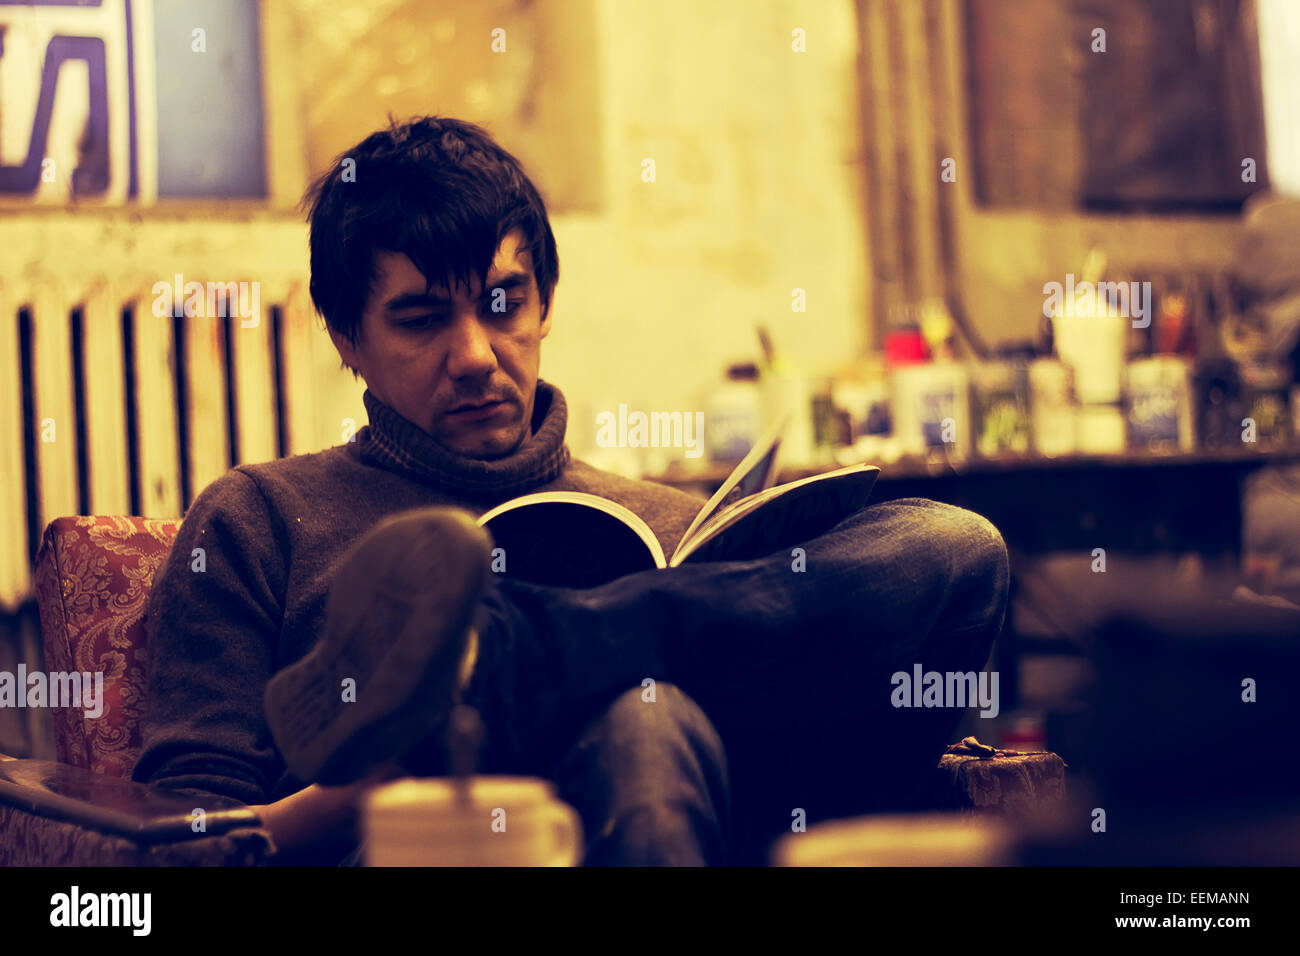 Asian man reading in armchair Stock Photo